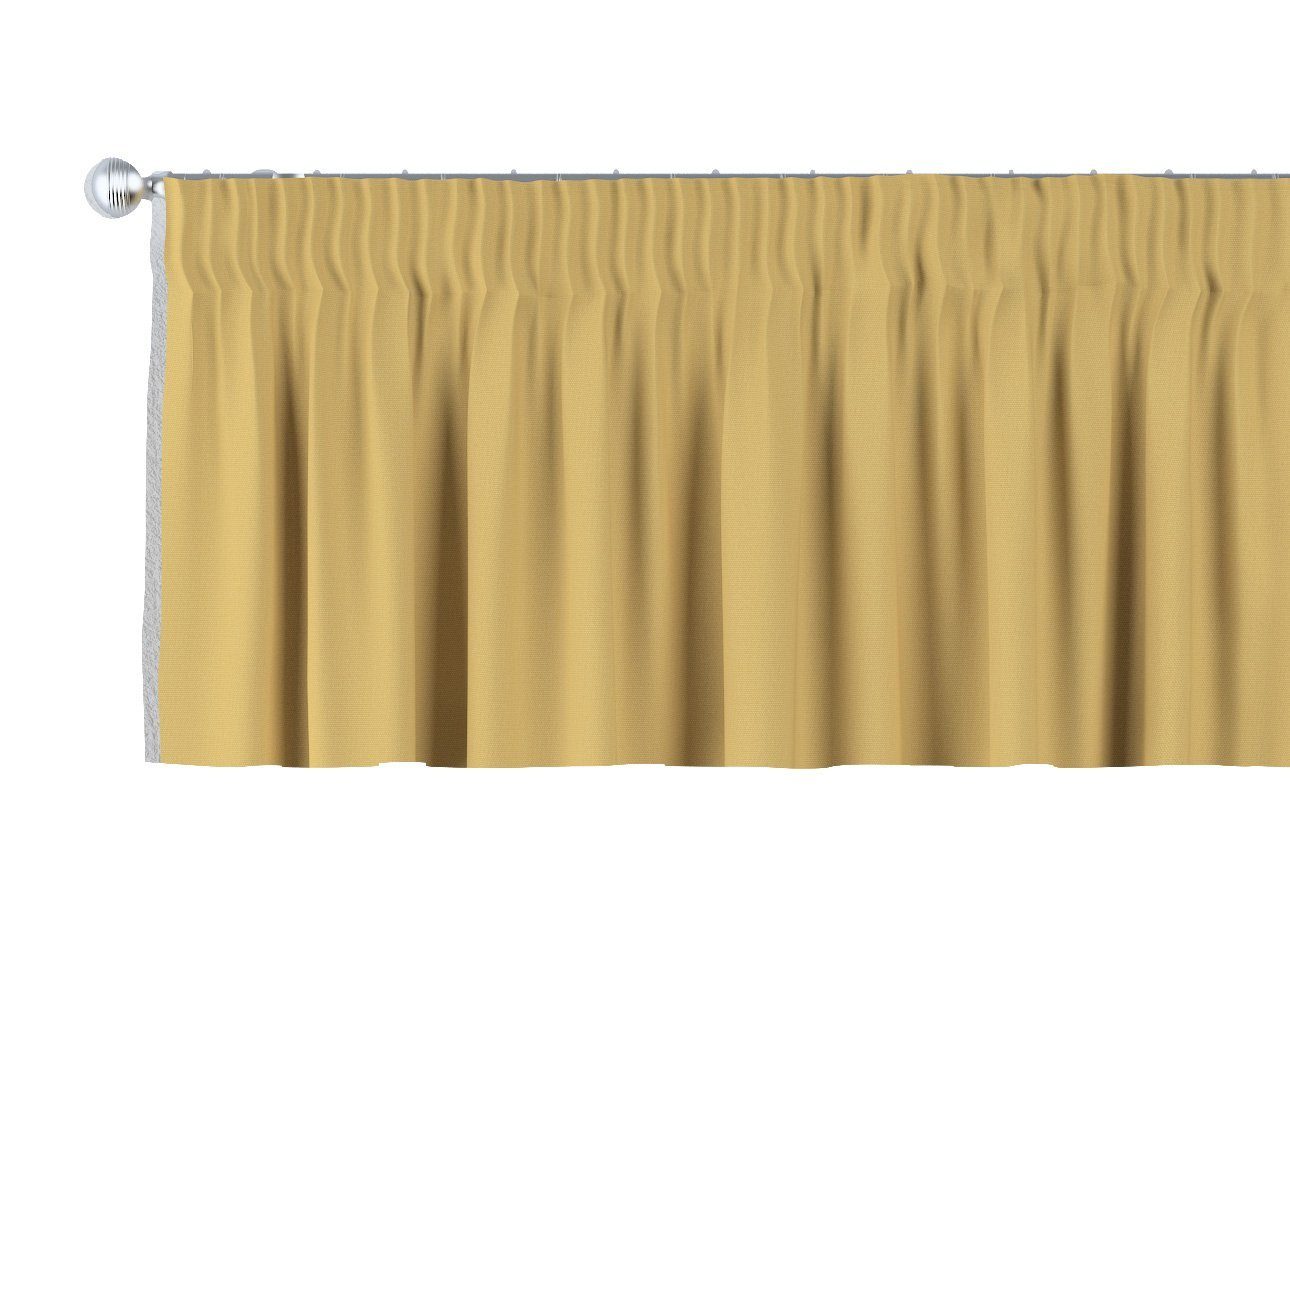 Vorhang mit Kräuselband 130 x 40 cm, Cotton Panama, Dekoria chiffongelb | Fertiggardinen